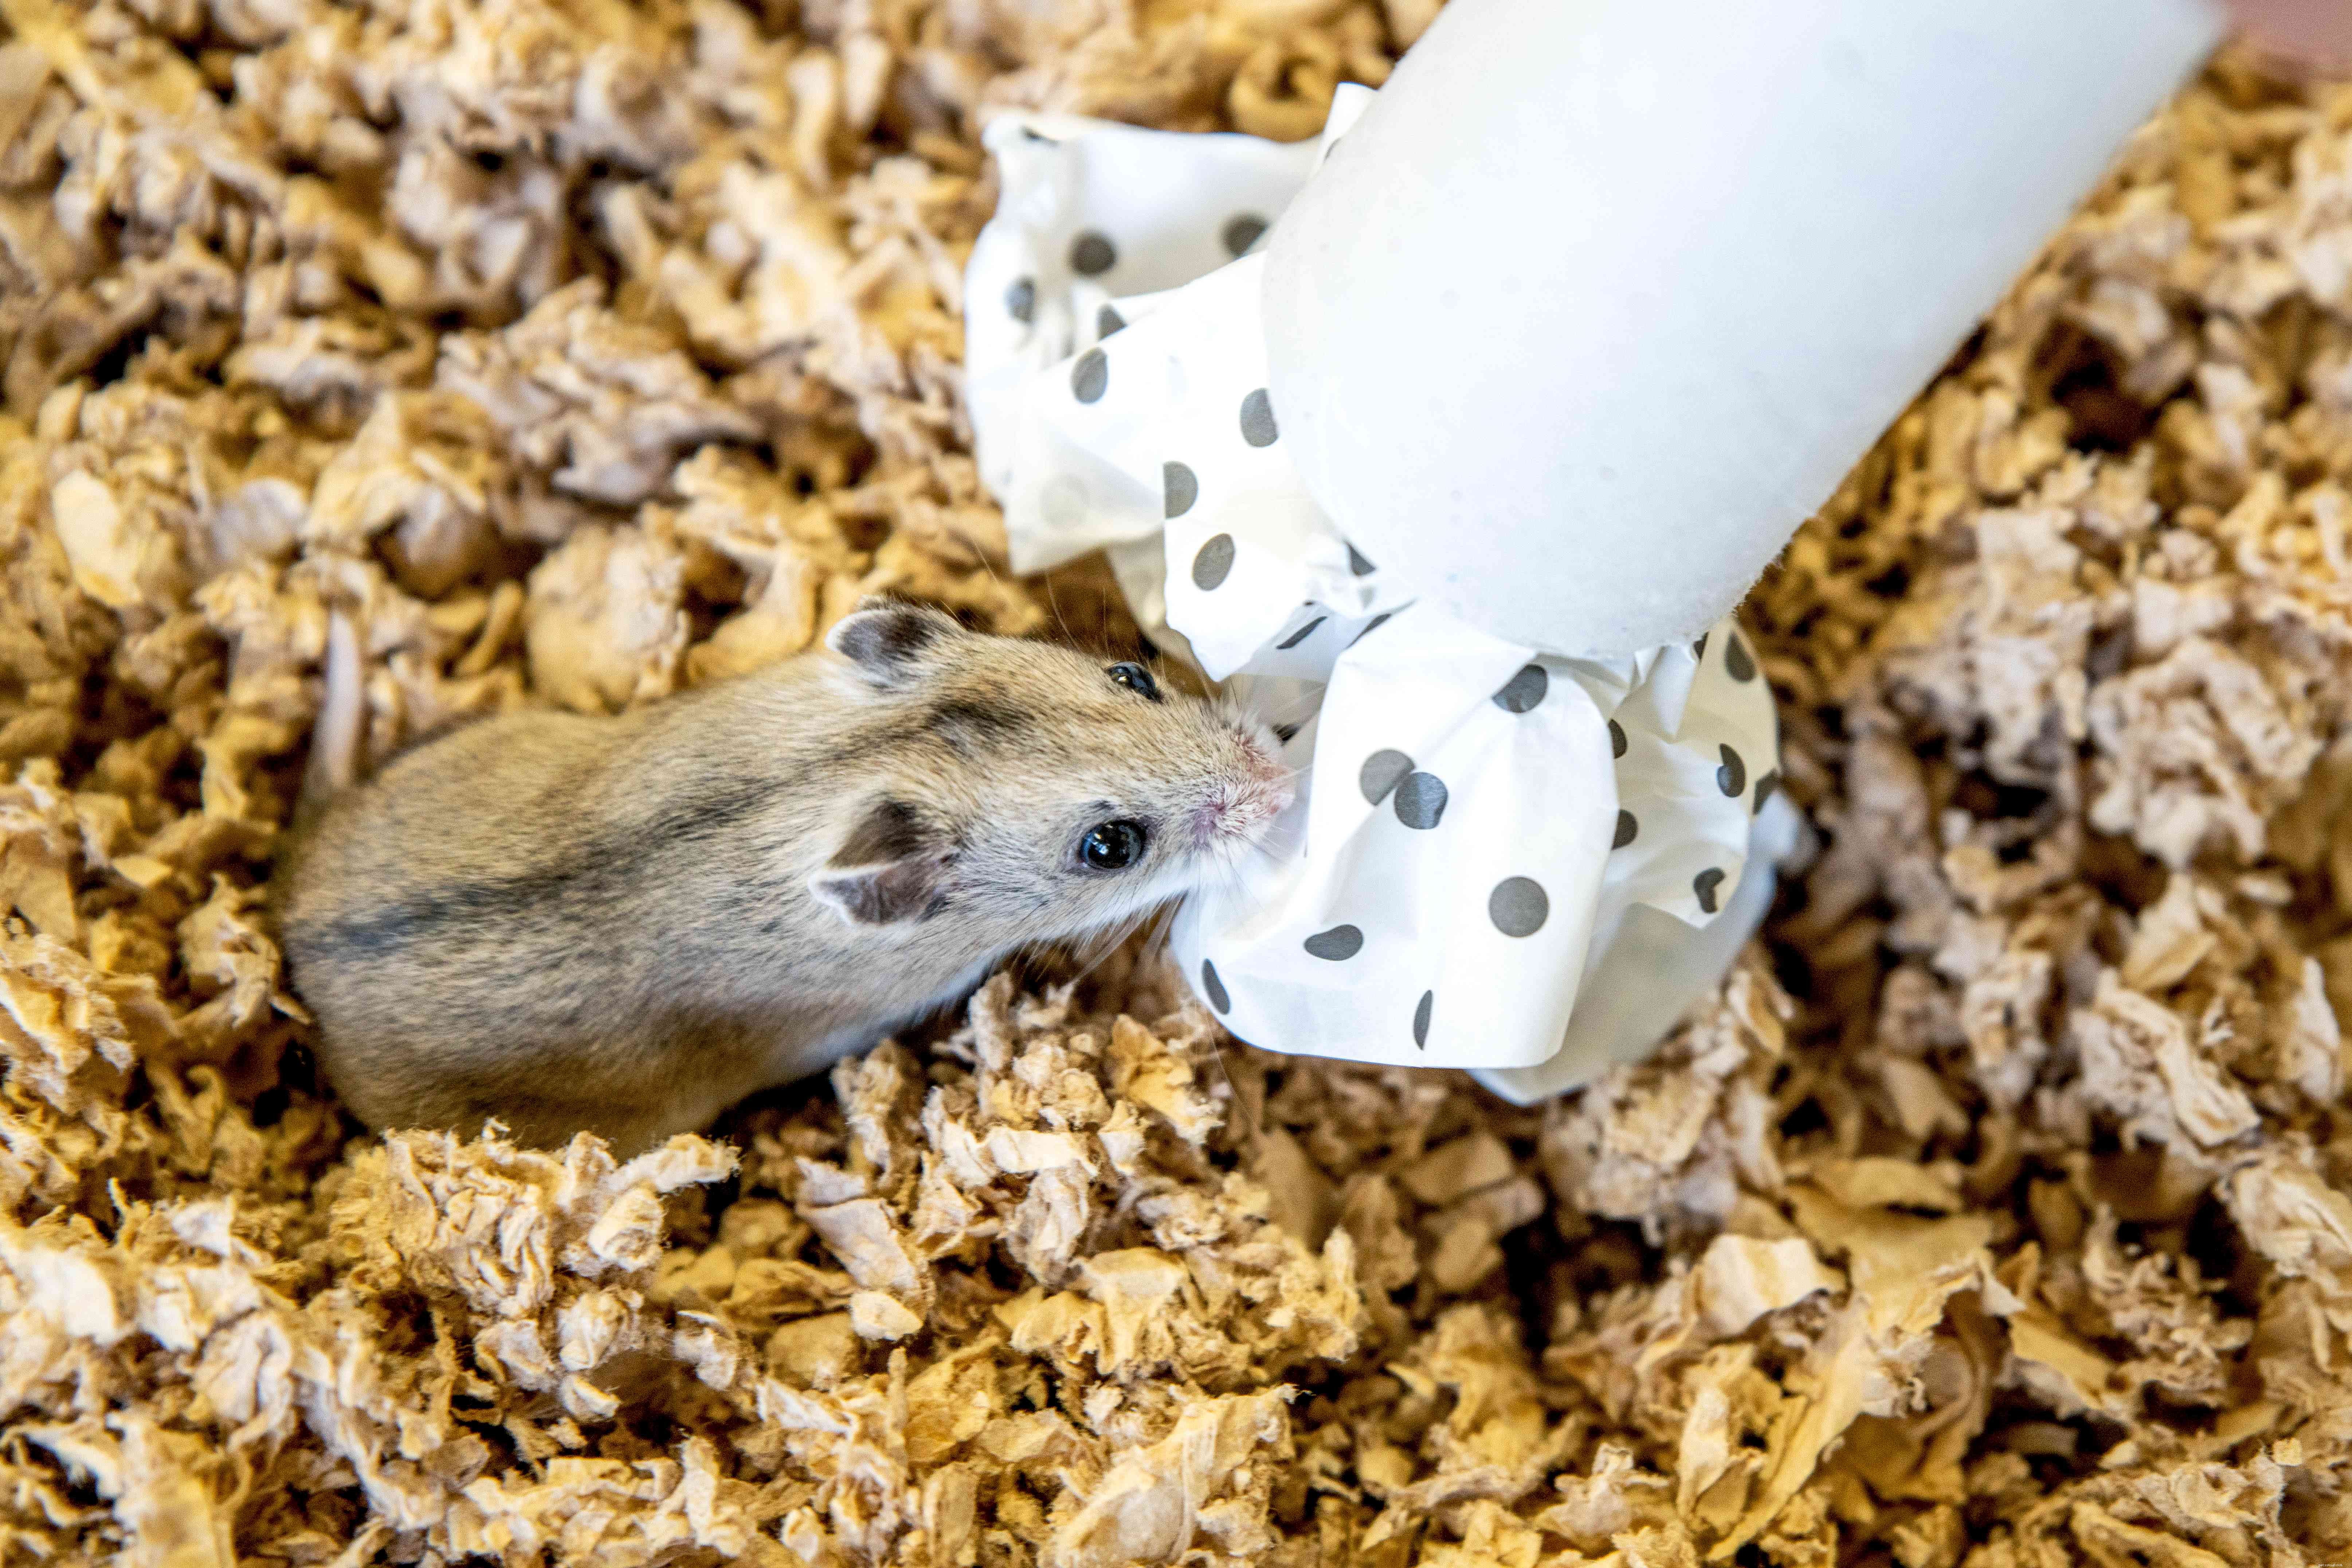 Comment apprendre à apprivoiser votre hamster